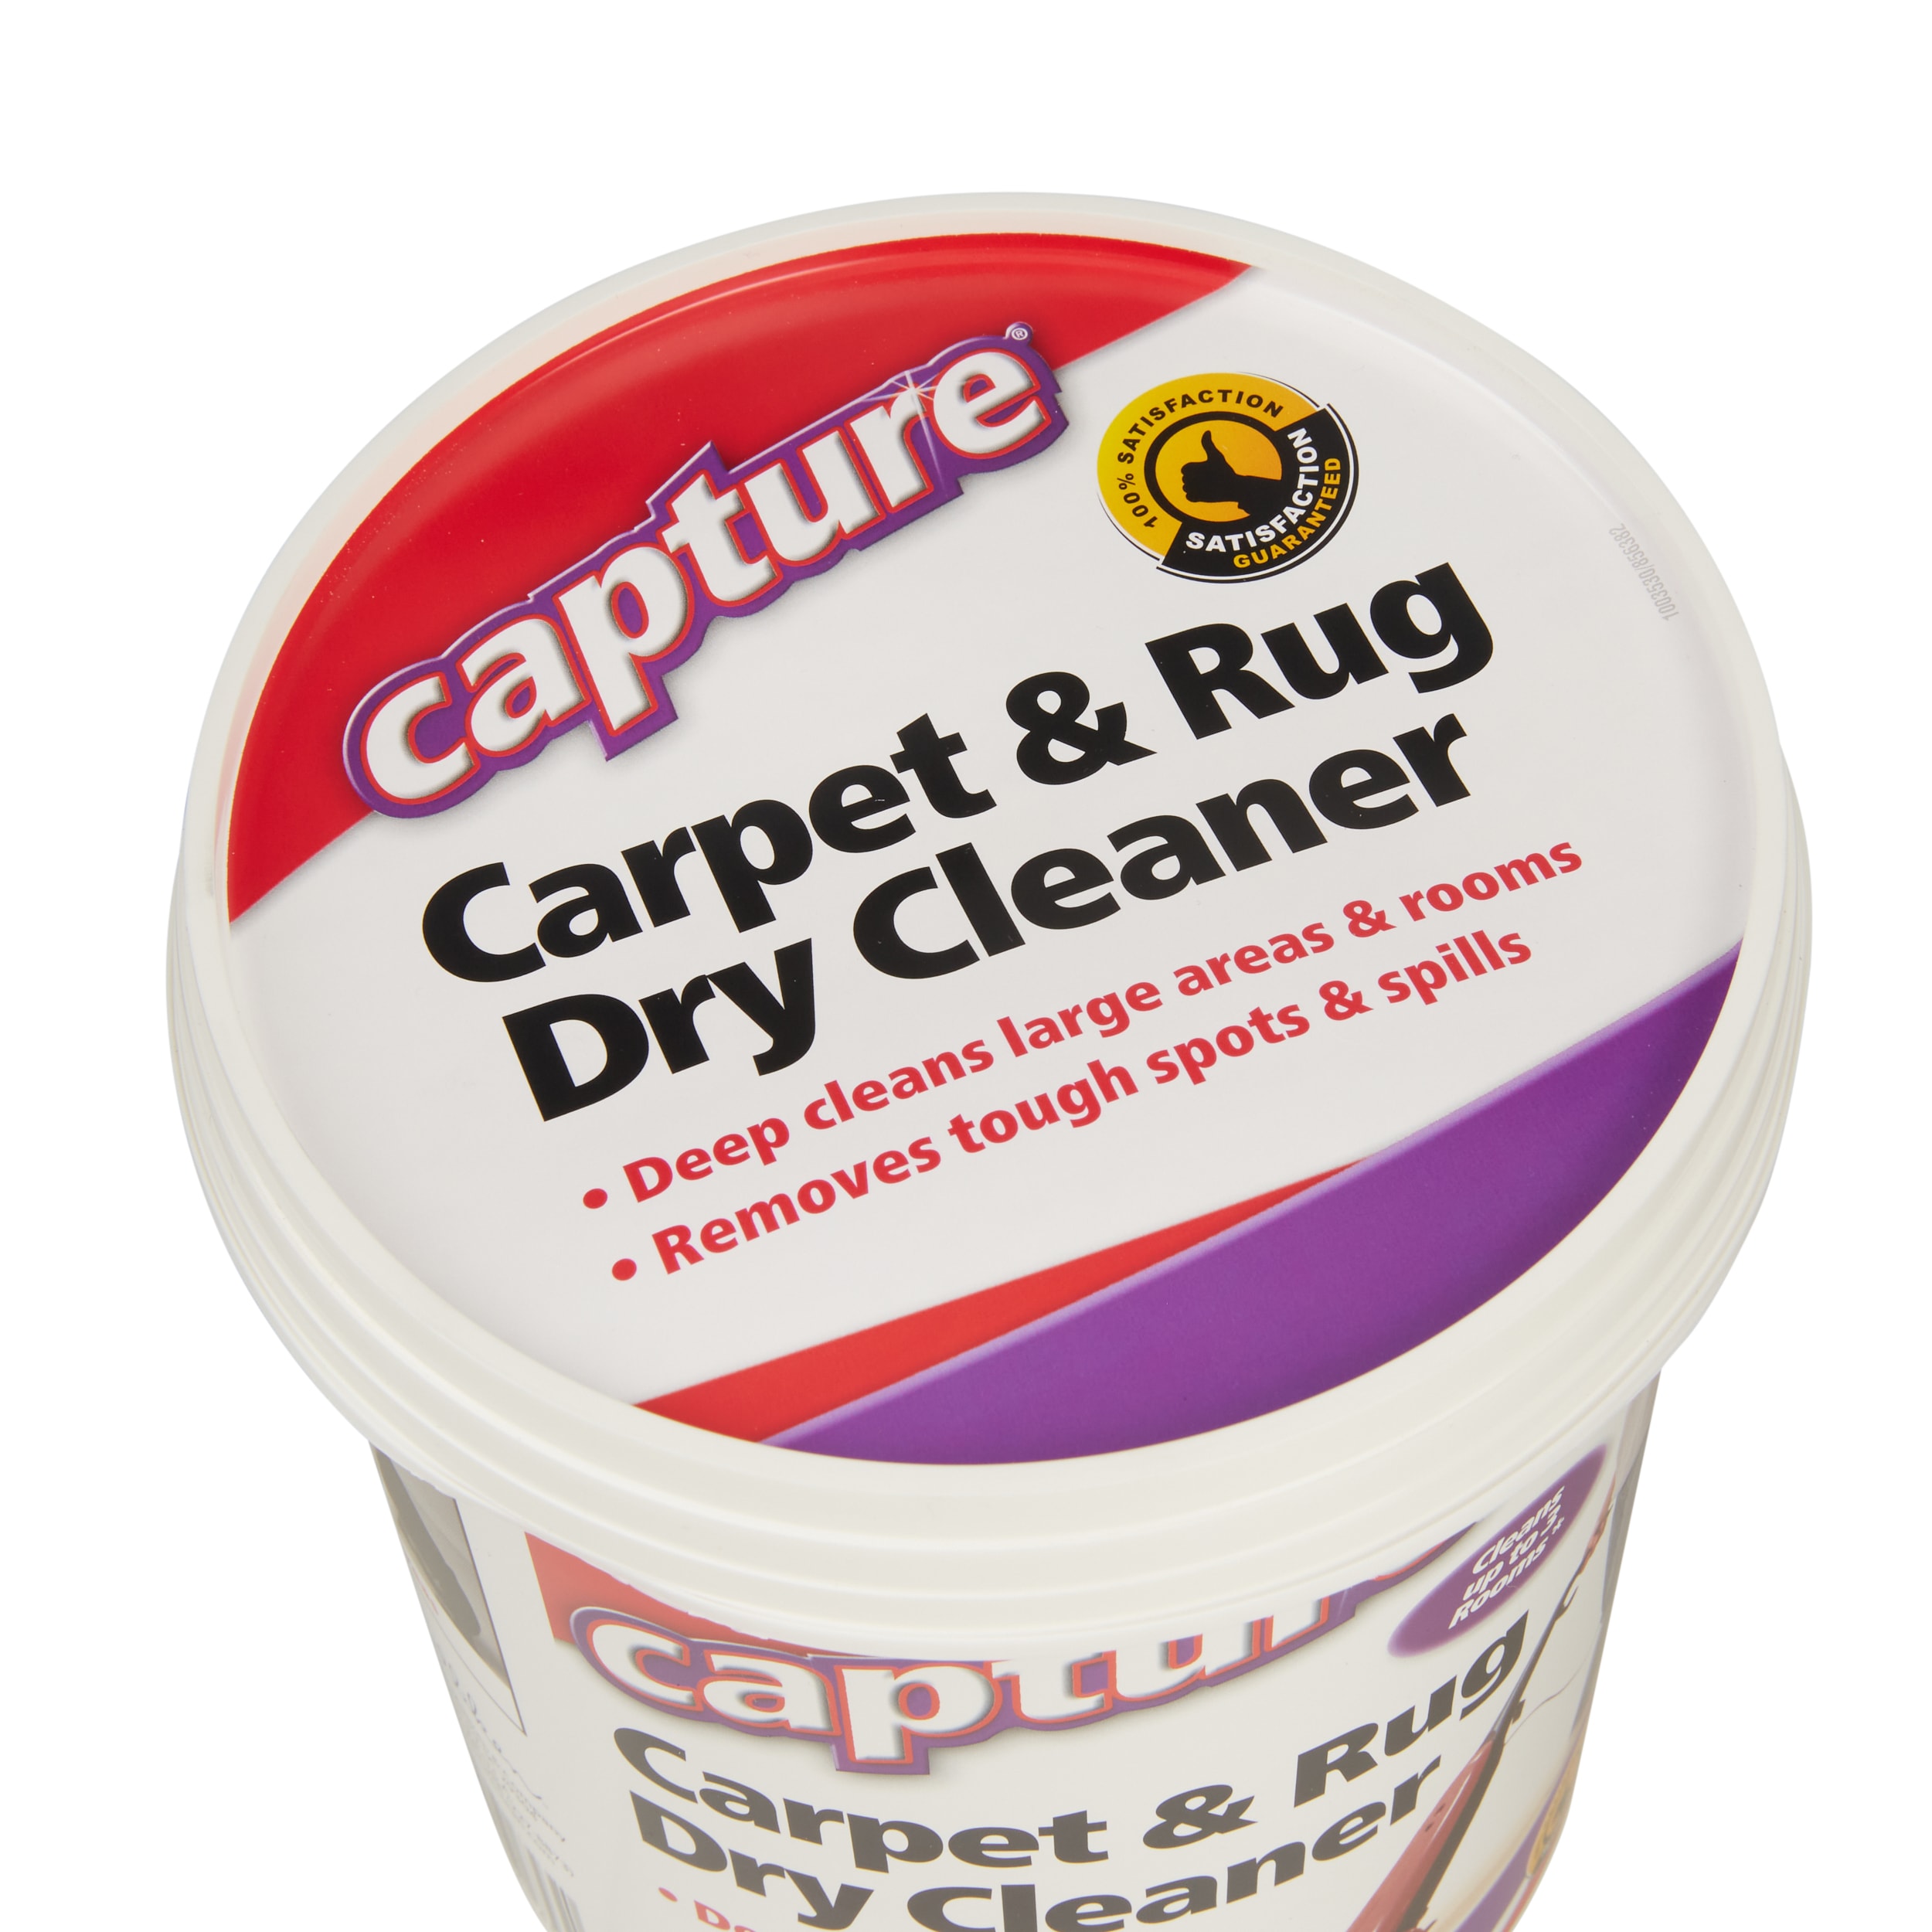 lowes capture carpet cleaner